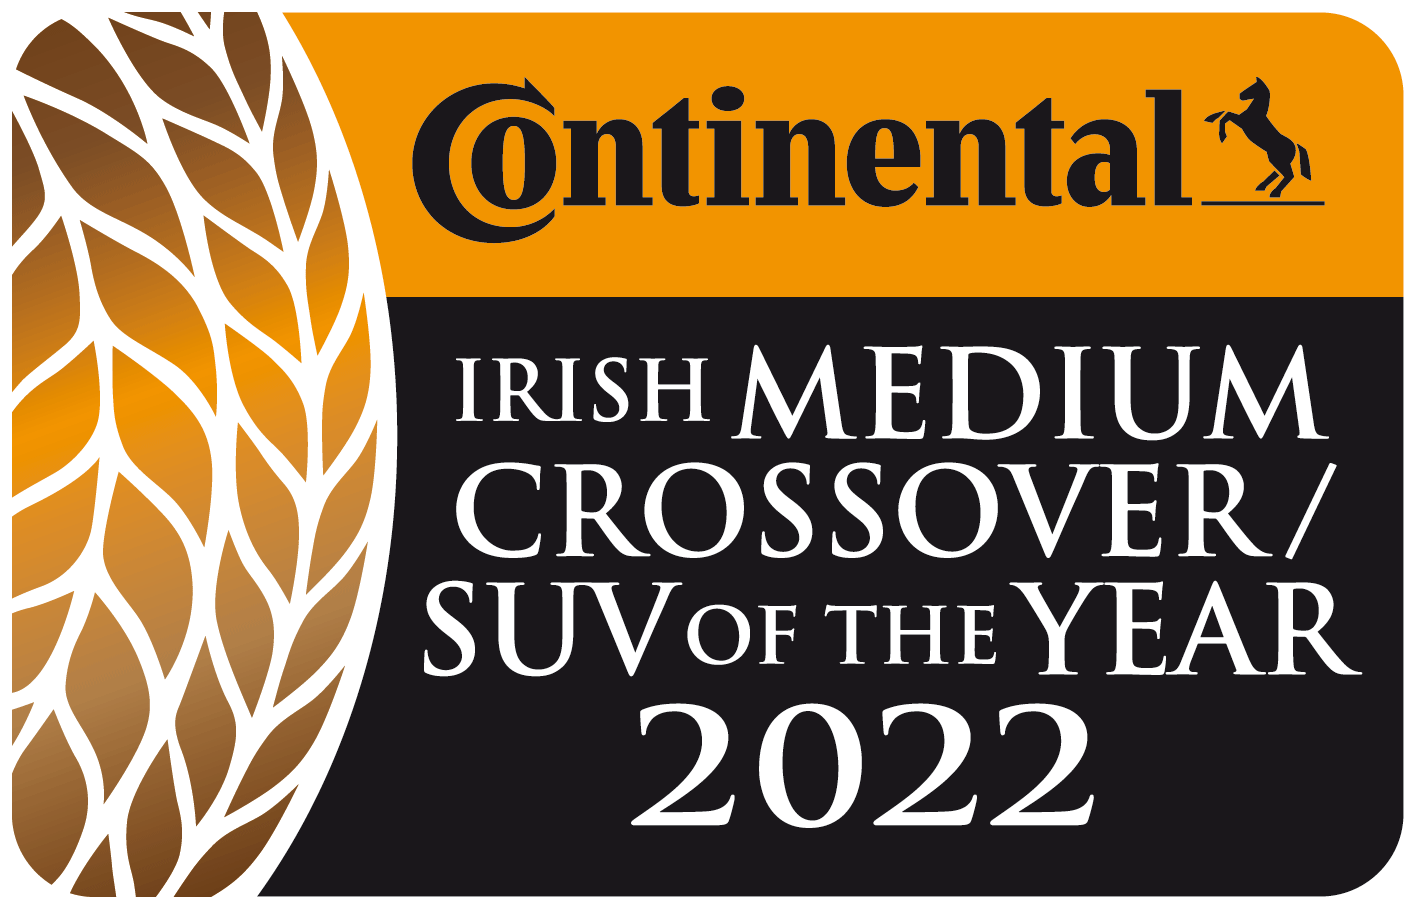 Continental Tyres Irish Medium Crossover / SUV of the Year 2022 – Nominees